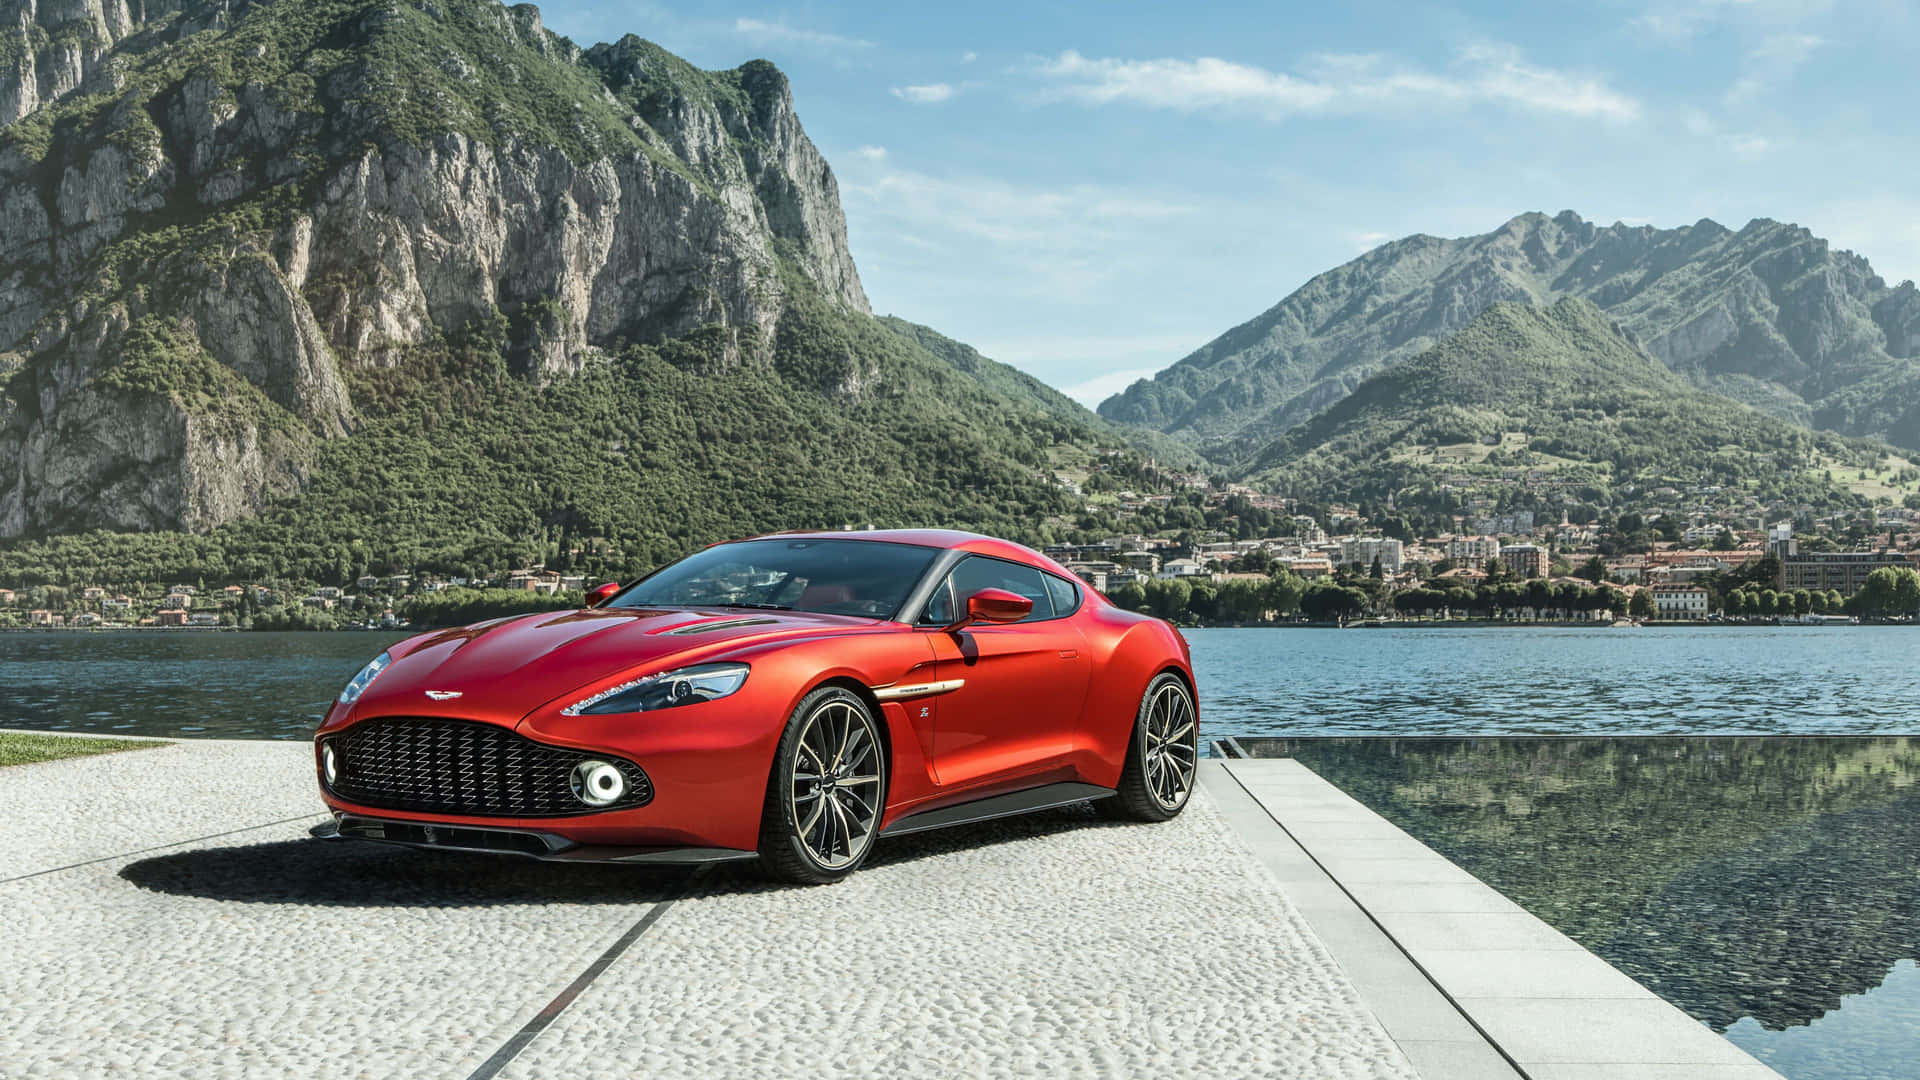 Experience the Luxury of an Aston Martin